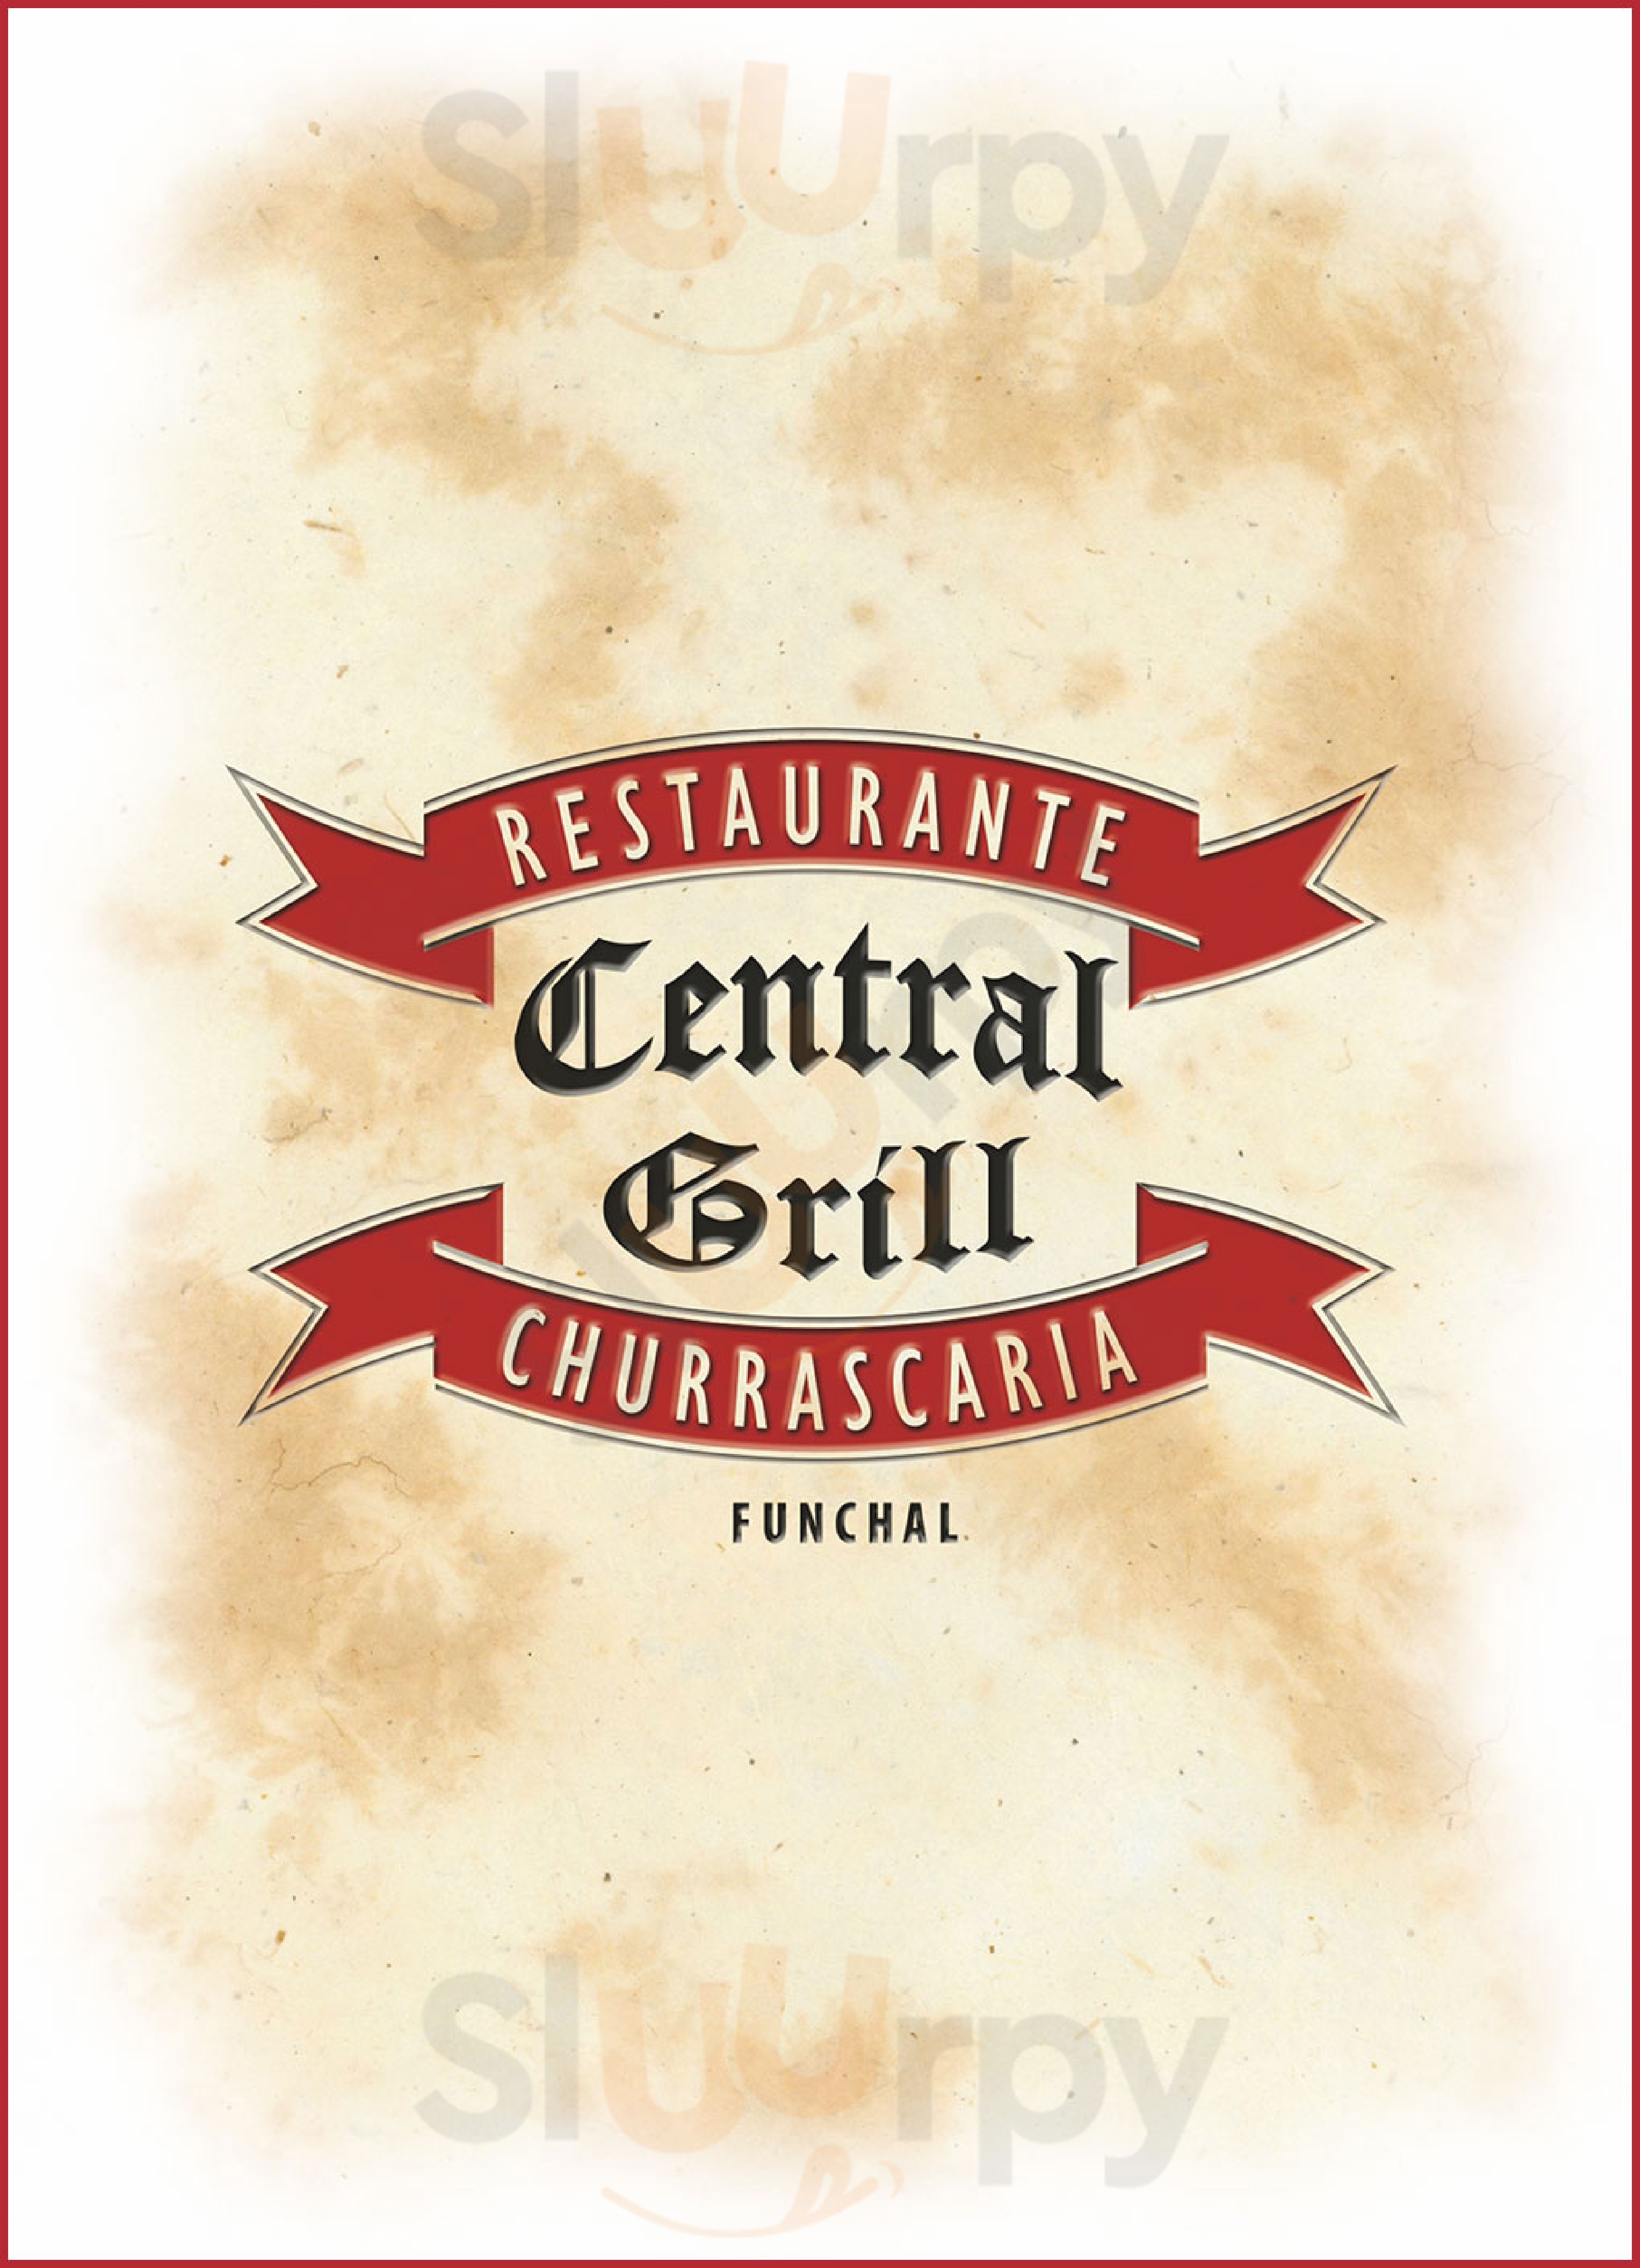 Central Grill : Churrascaria - Restaurante Funchal Menu - 1